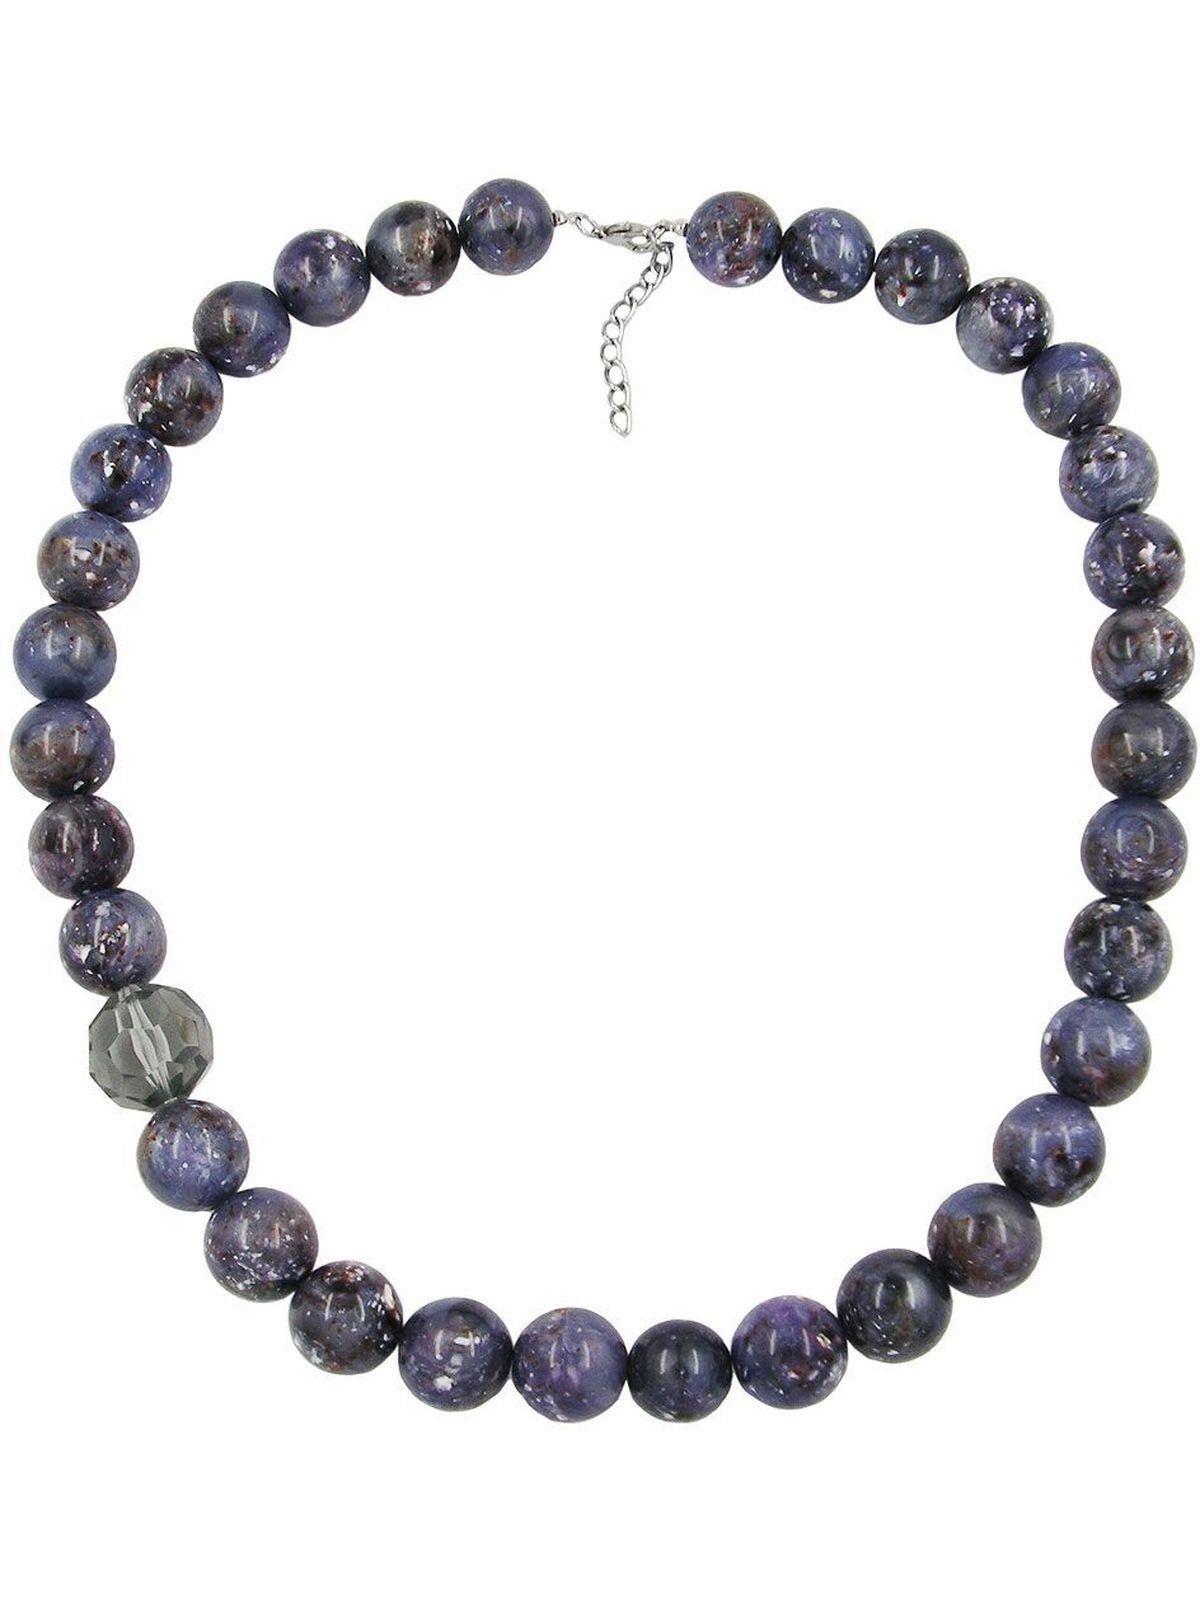 Gallay Perlenkette Kette Perlen 18mm lila-grau-weiß